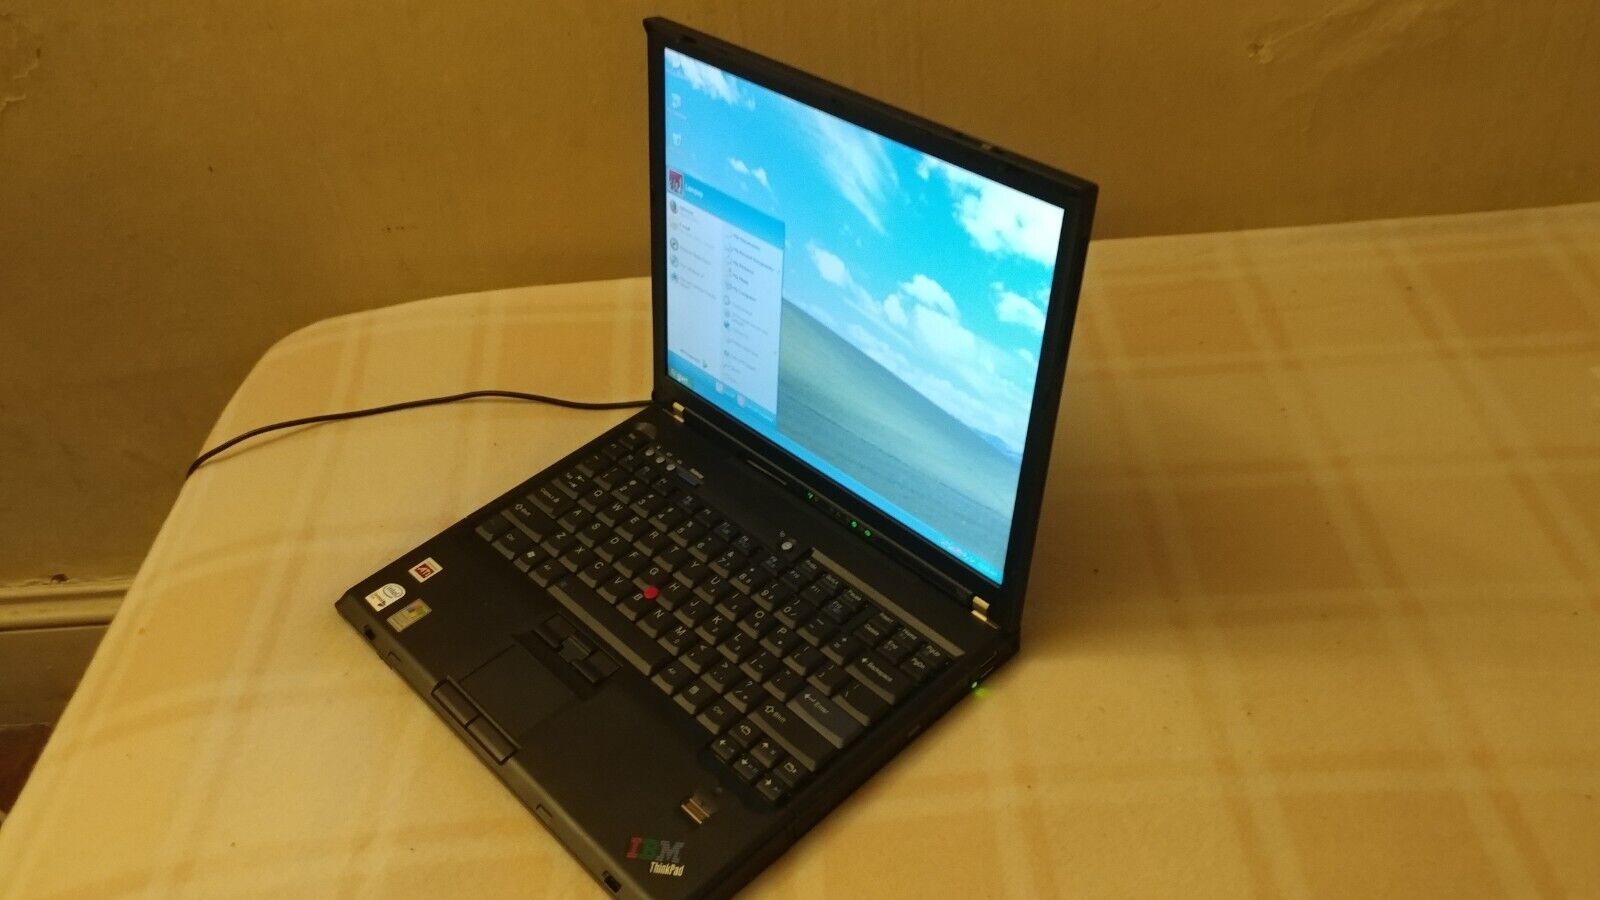 IBM Lenovo Thinkpad T60 Laptop Core Duo 1.83 GHz 4 GB Ram Windows XP pro SP3